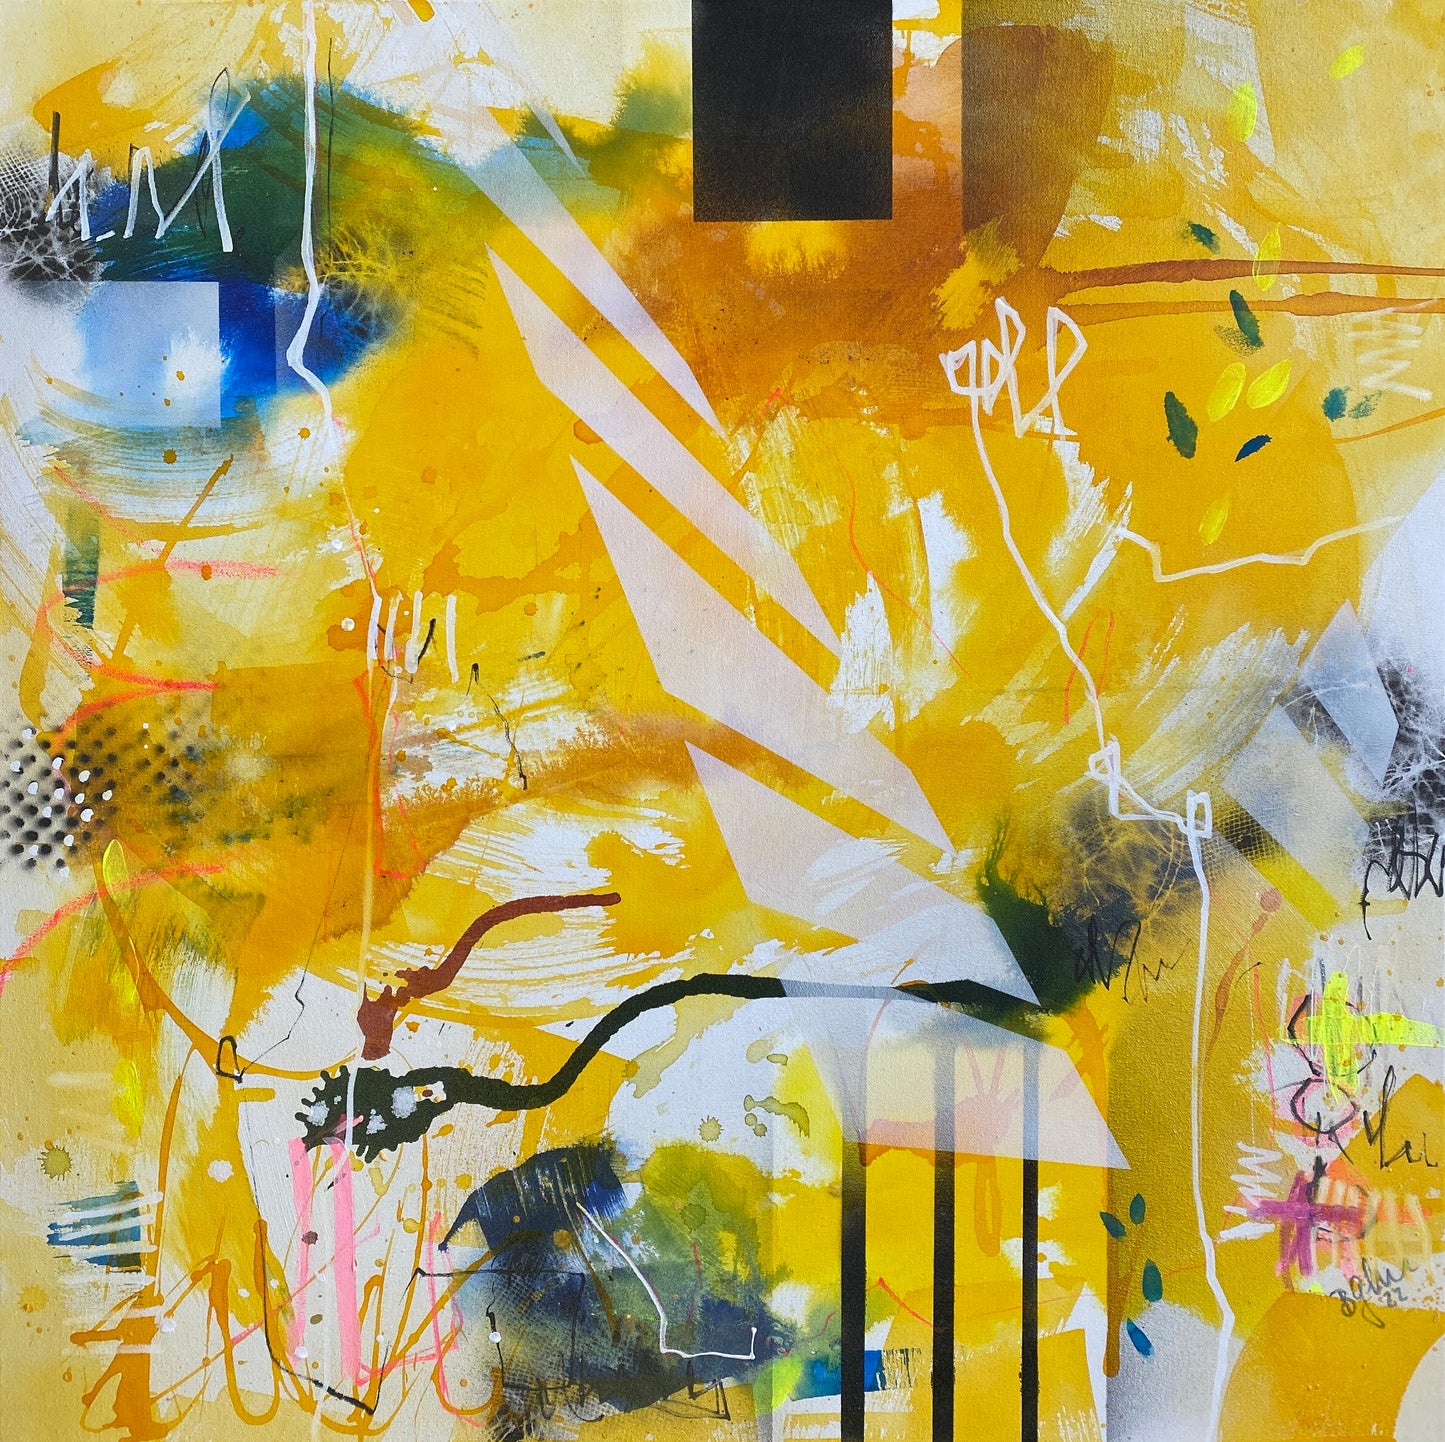 Bea Garding Schubert: "Dream Yellow No.3"